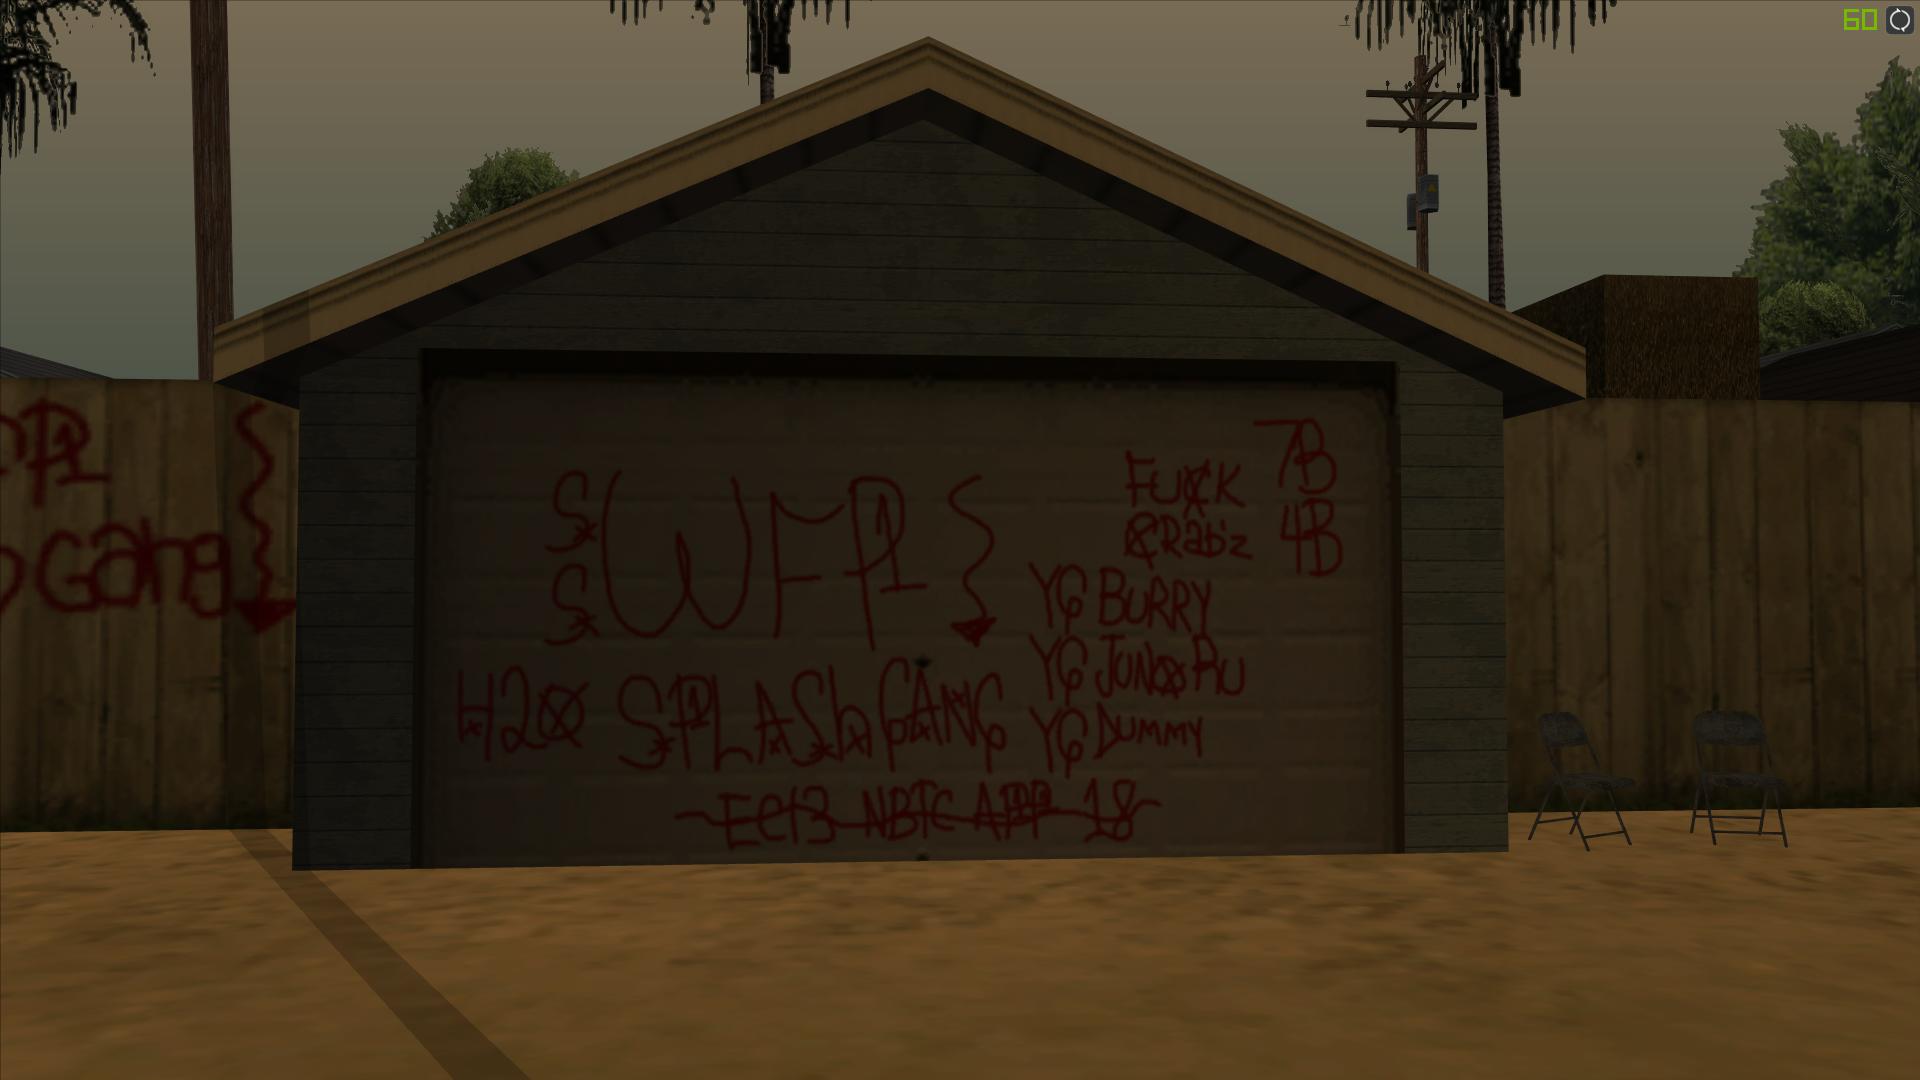 [REL] Piru's Gang WFP_EMOD GraffitiPack. Zpin